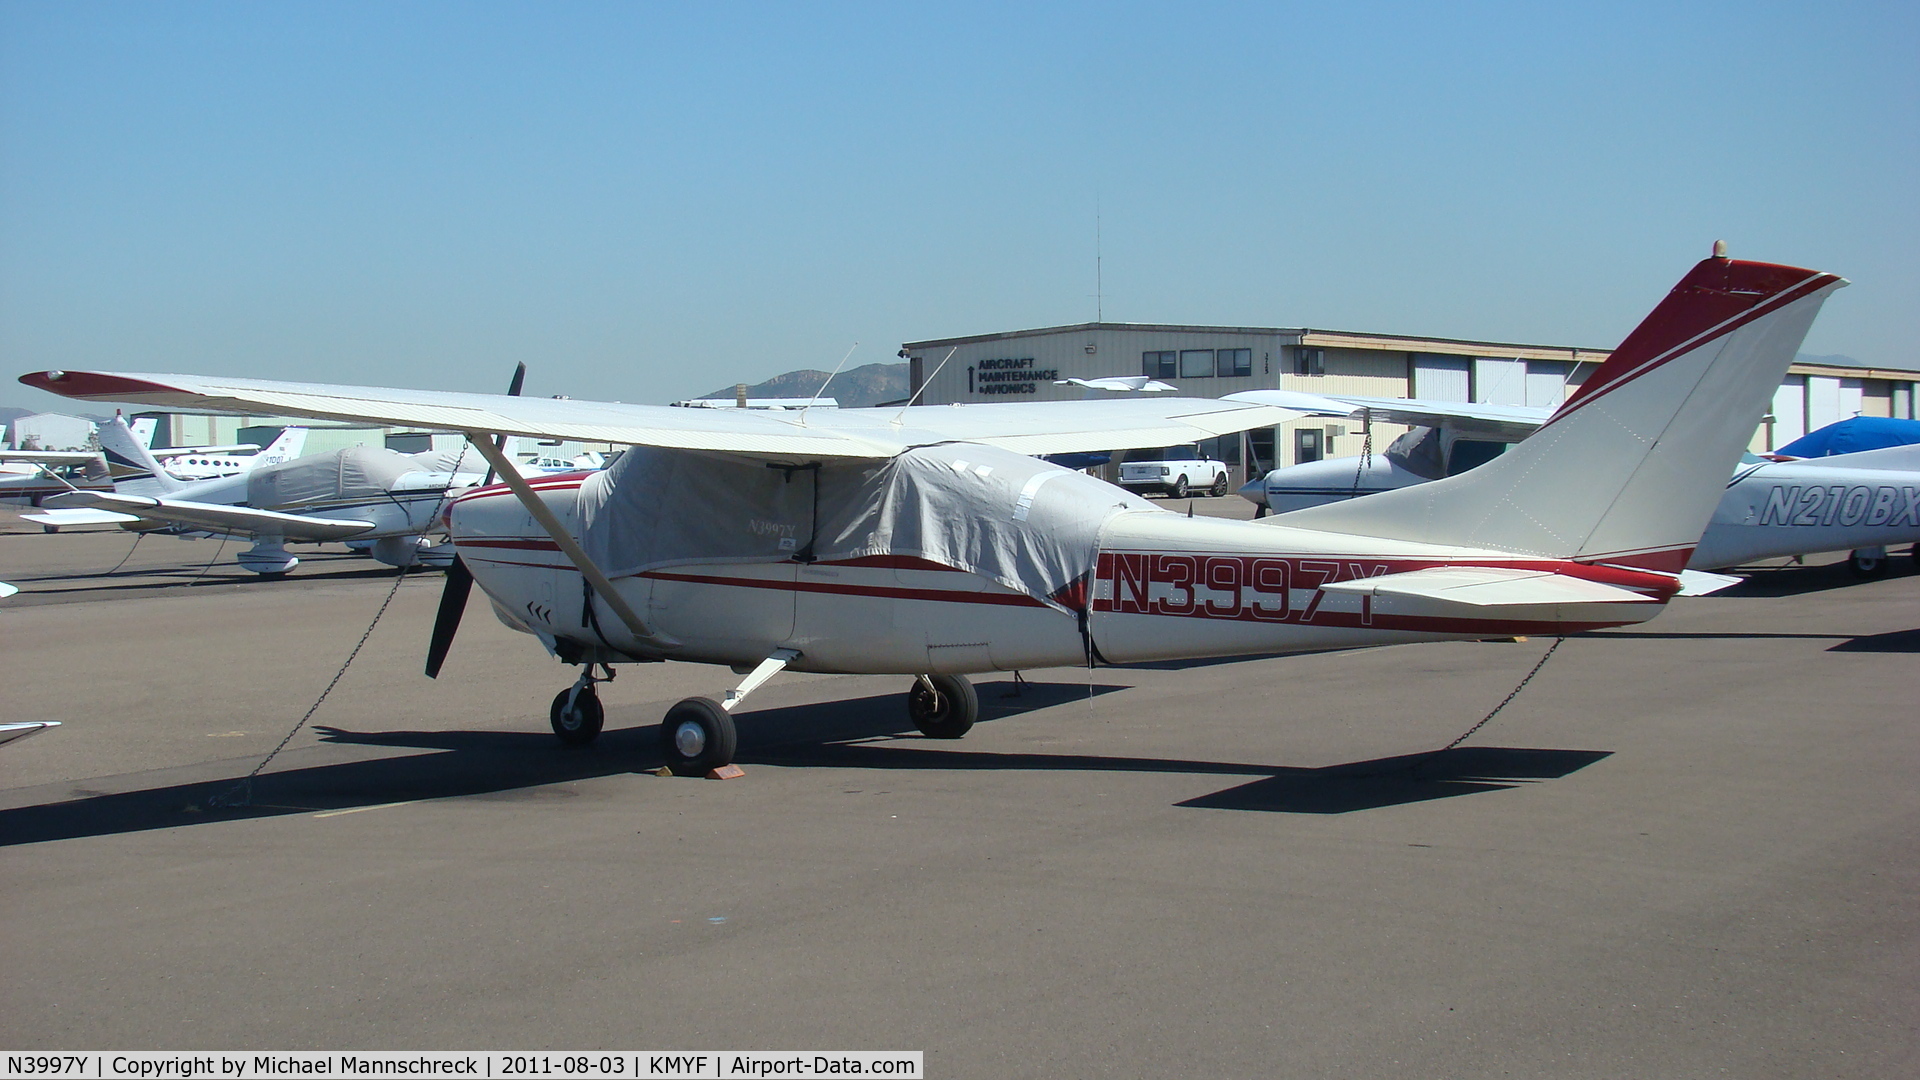 N3997Y, 1964 Cessna 210D Centurion C/N 21058497, Parked on the Ramp